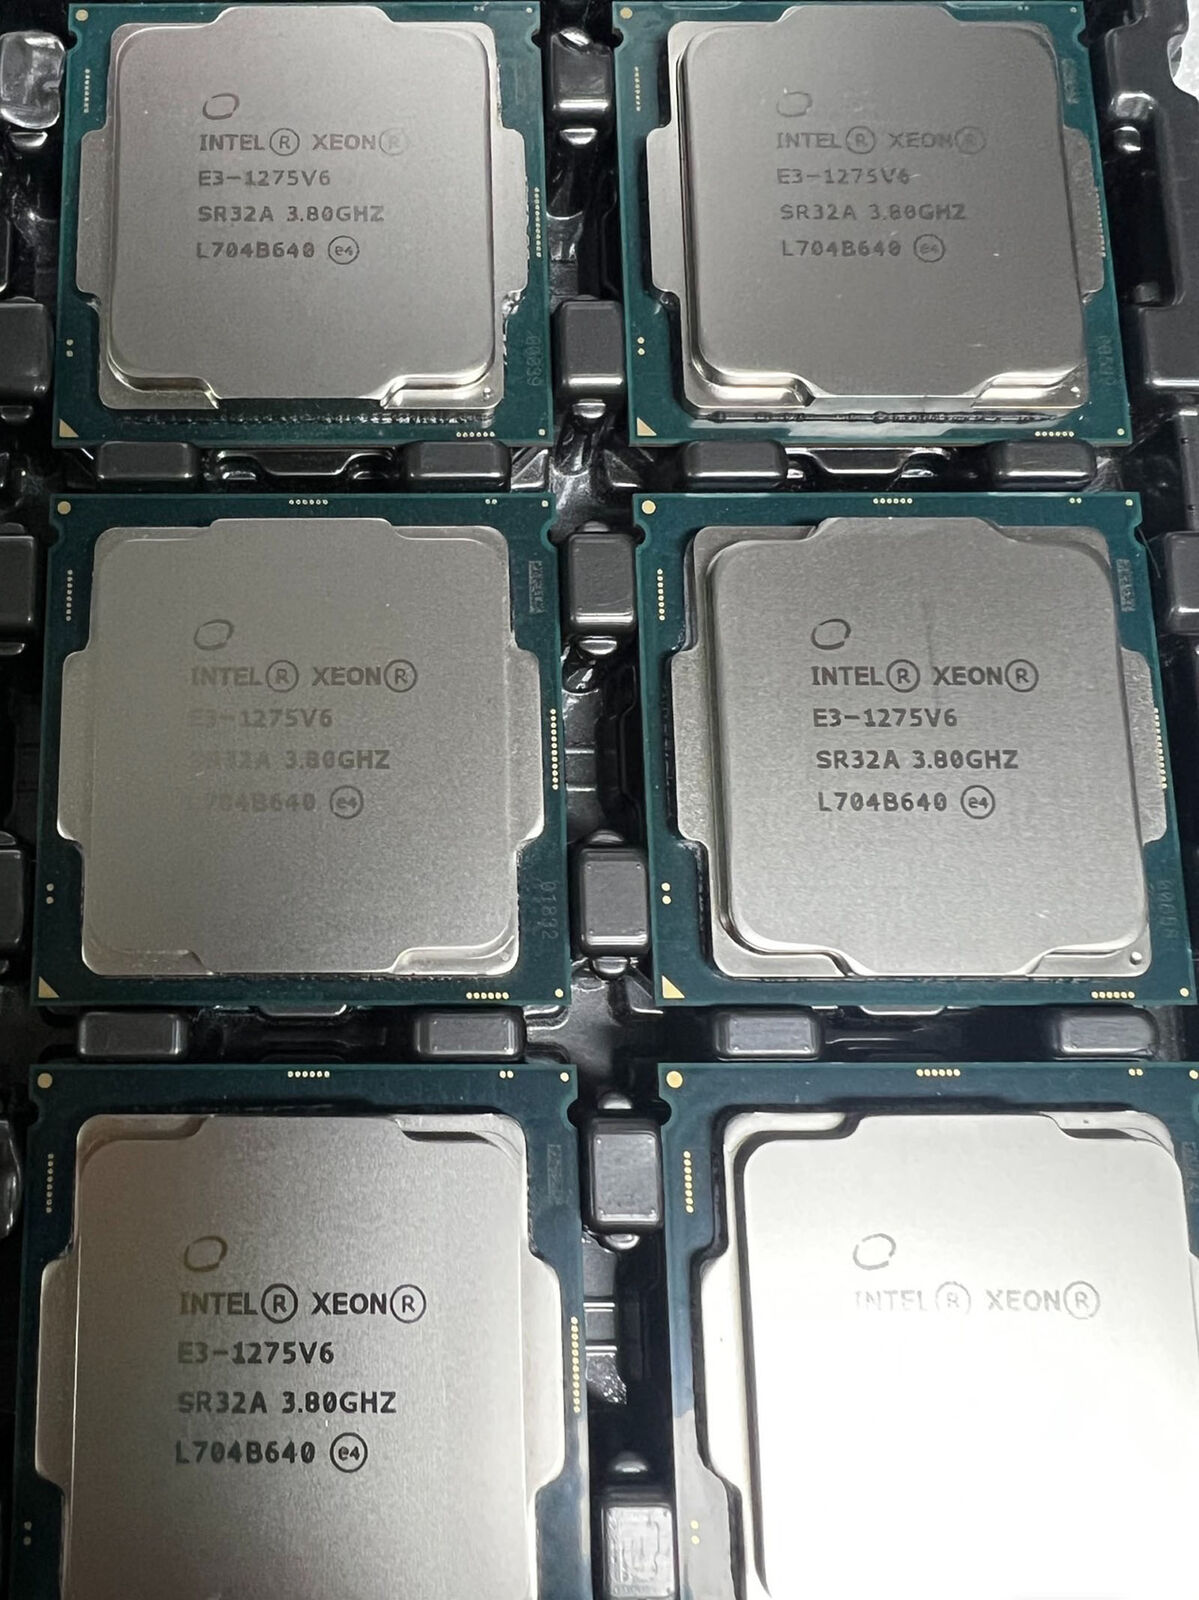 Intel Xeon E3-1275 V6 3.80GHz 4-core 8-thread 8MB 73W LGA1151 CPU processor